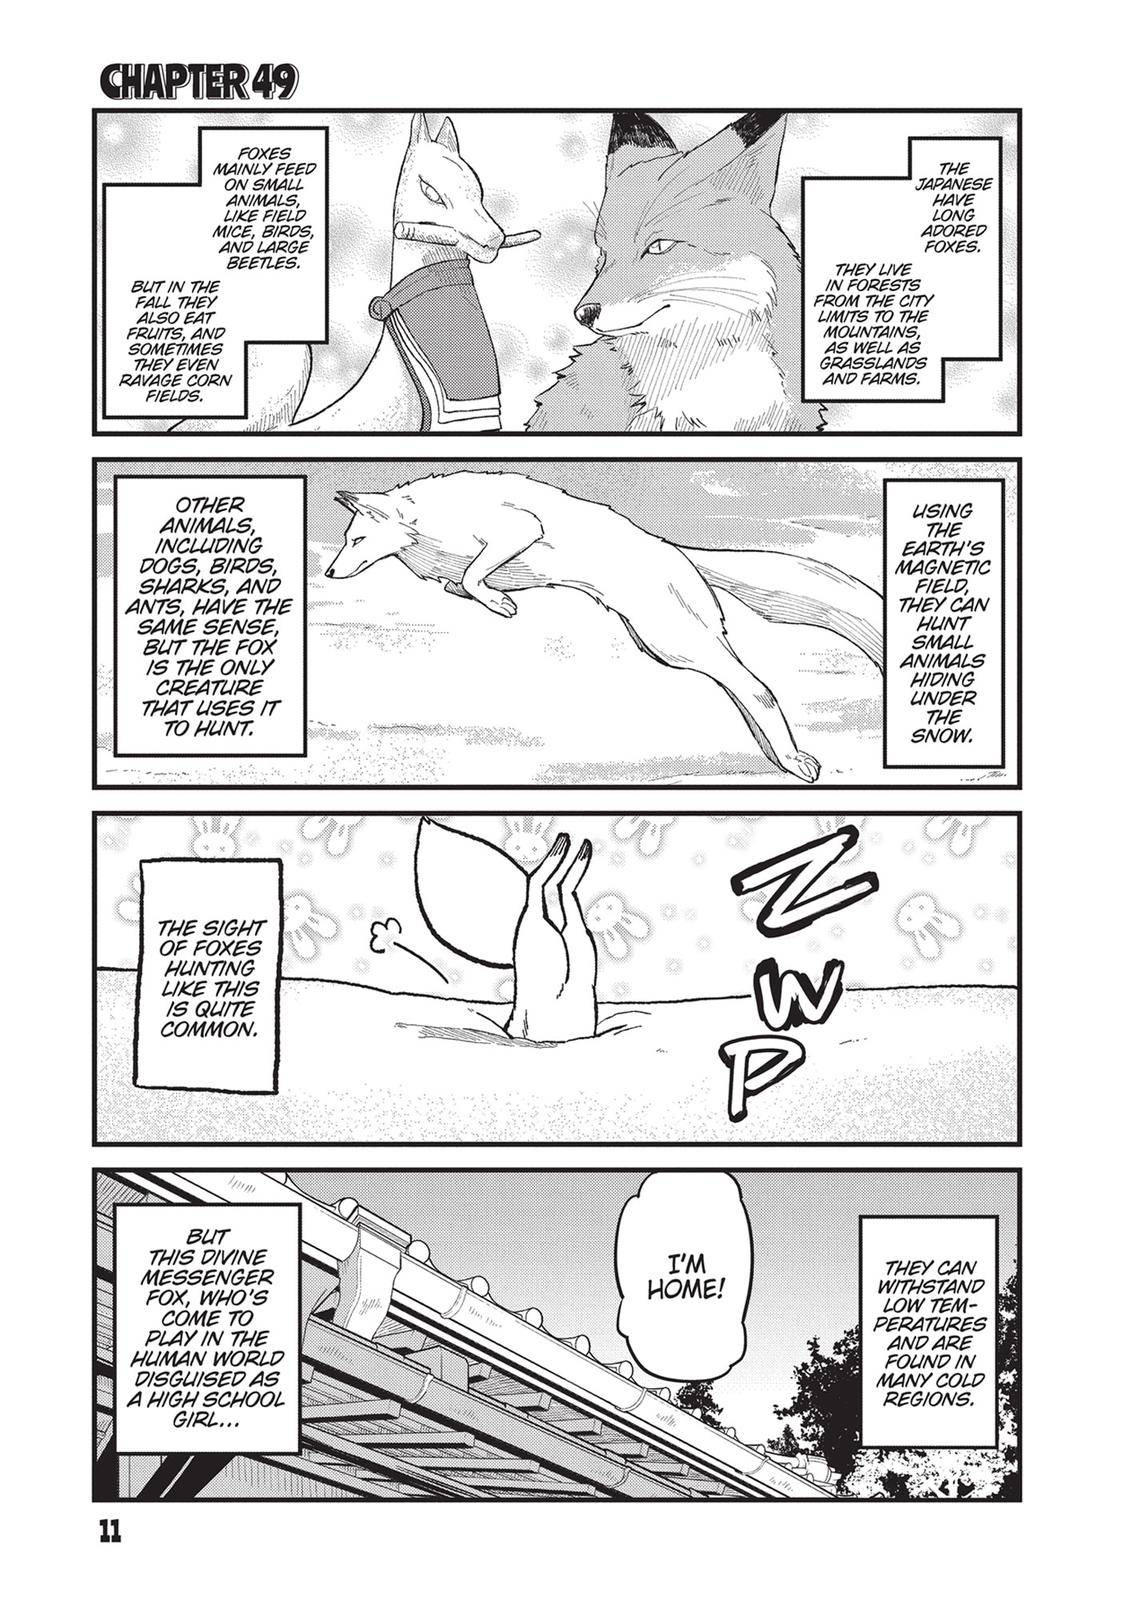 Tamamo-chan's a Fox! - chapter 49 - #1